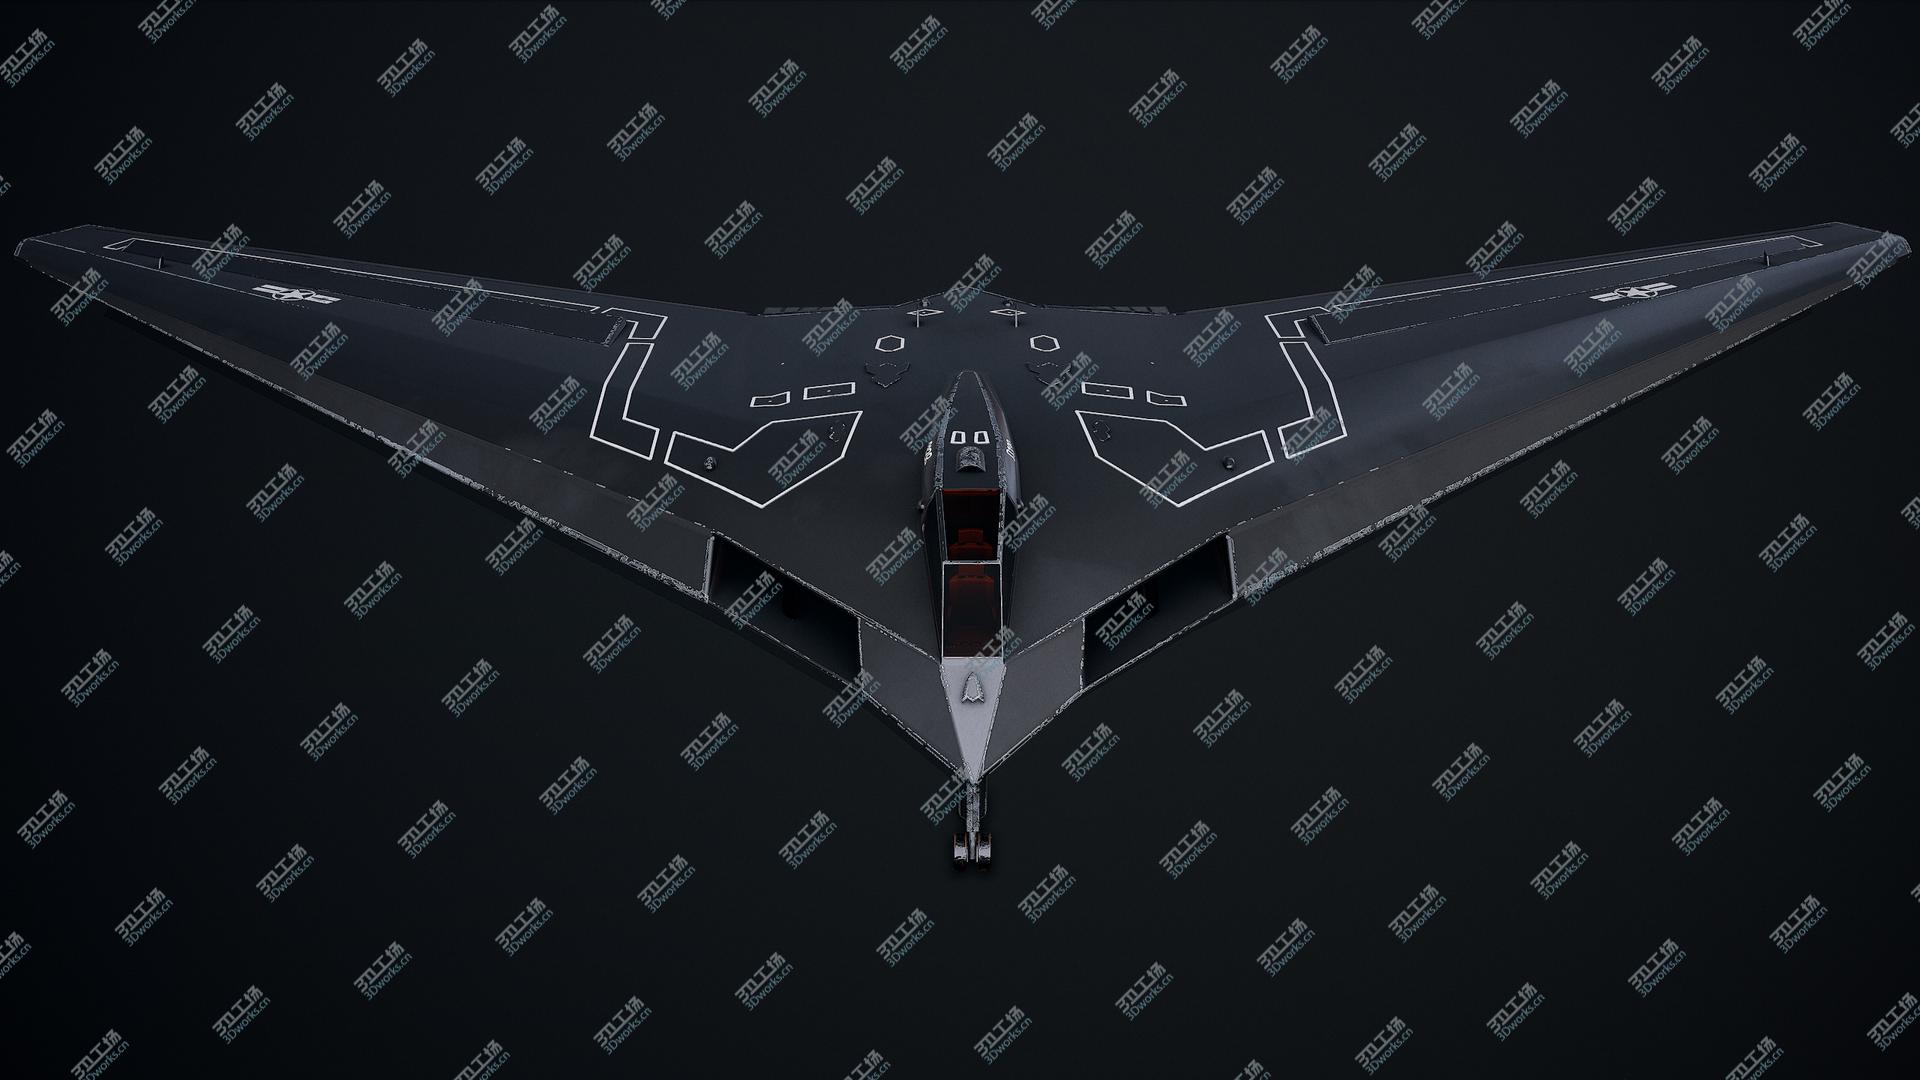 images/goods_img/2021040233/Futuristic Sci-Fi Plane Concept model/3.jpg